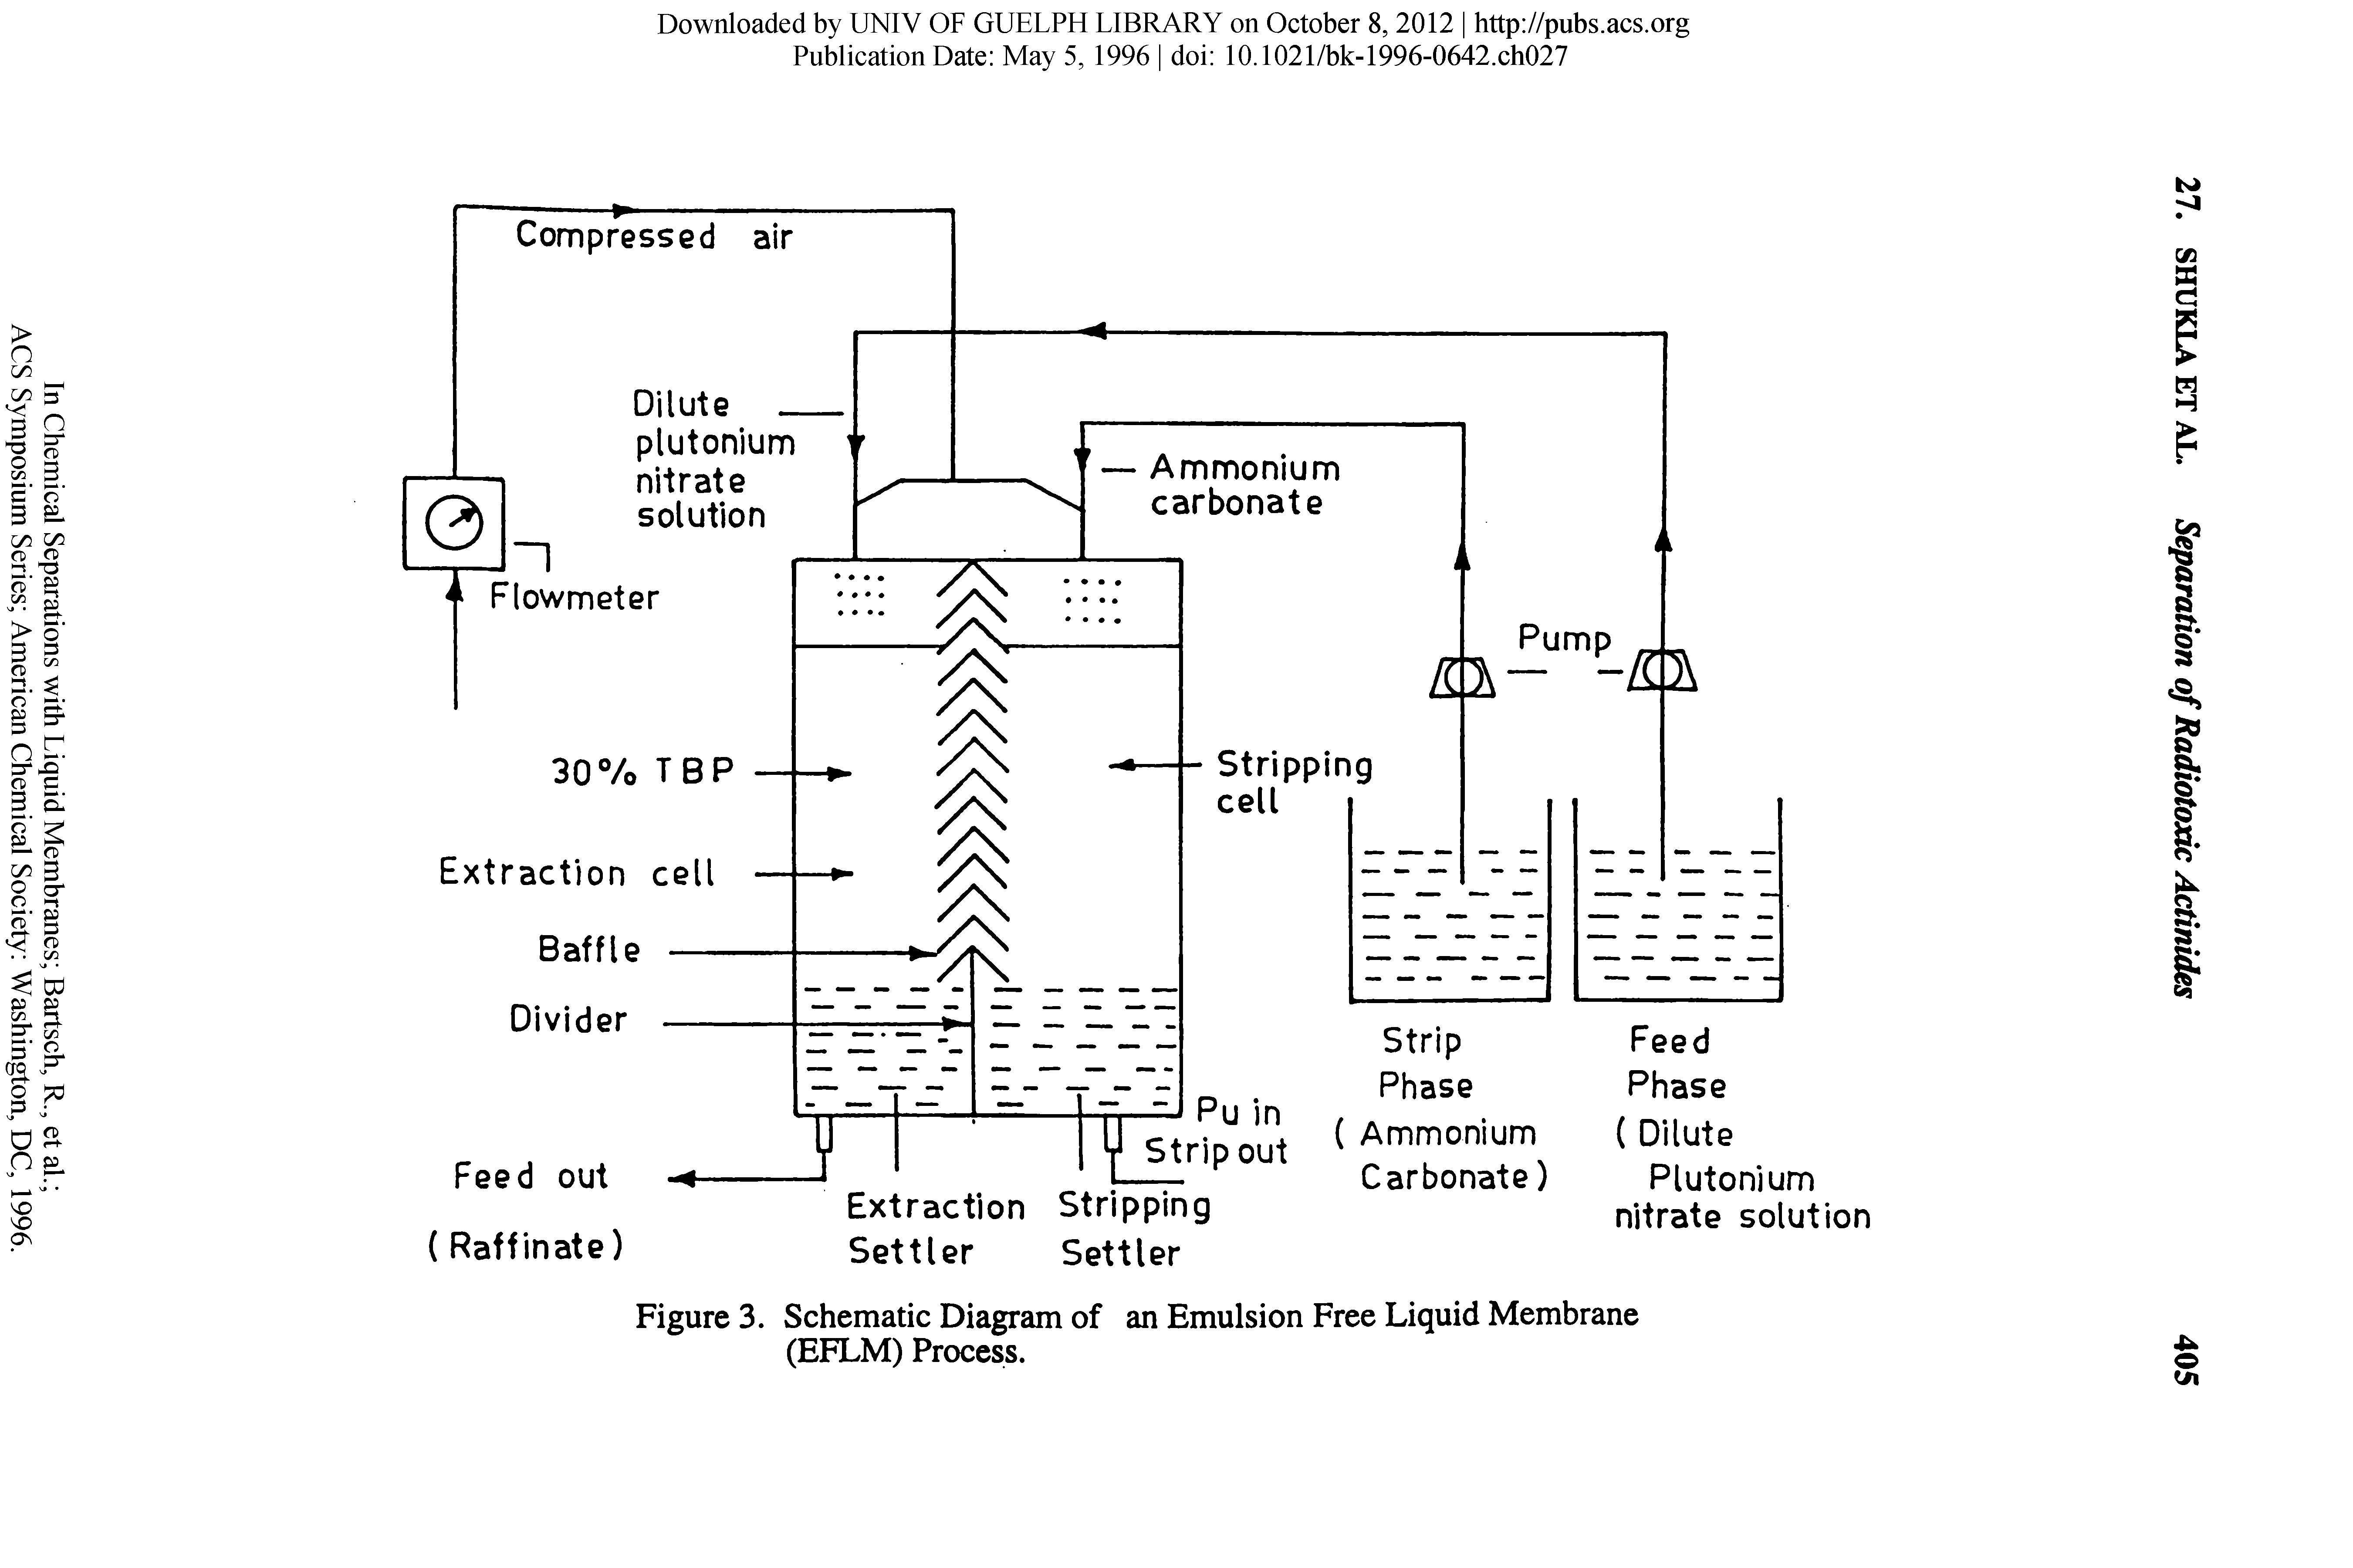 Figure 3. Schematic Diagram of an Emulsion Free Liquid Membrane (EFLM) Process.